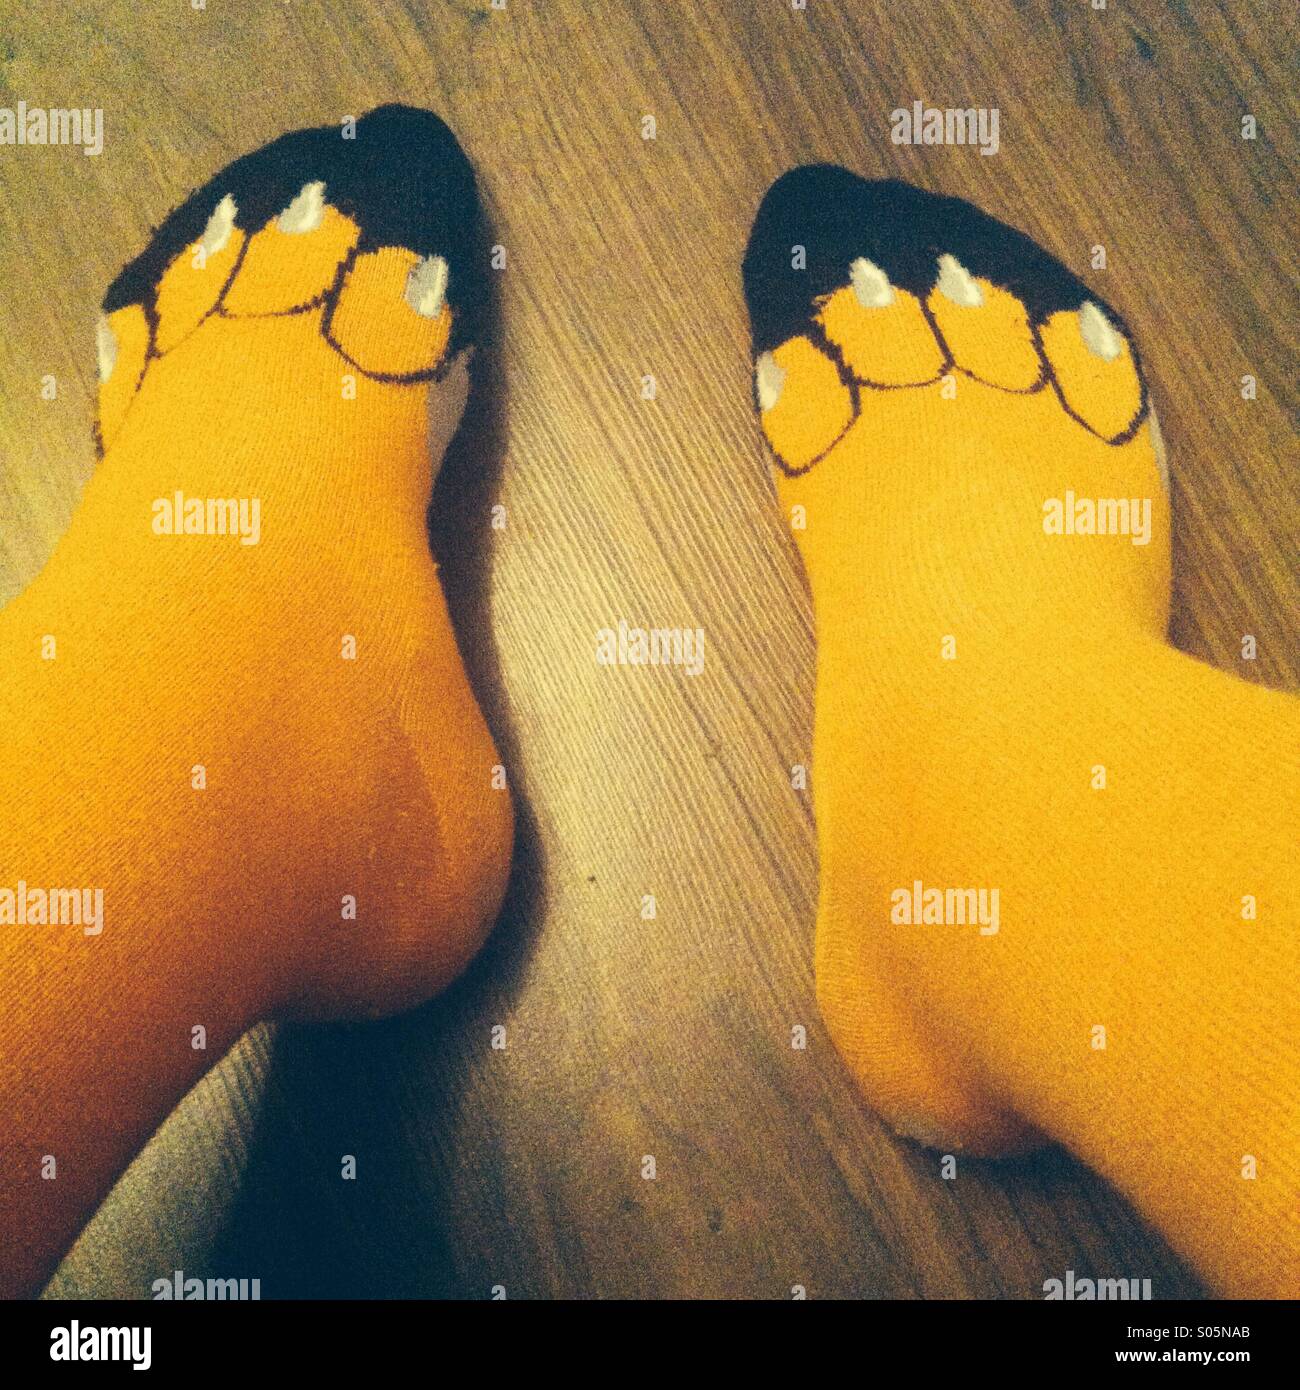 man's feet in orange animal paw socks against a wooden floor Stock Photo